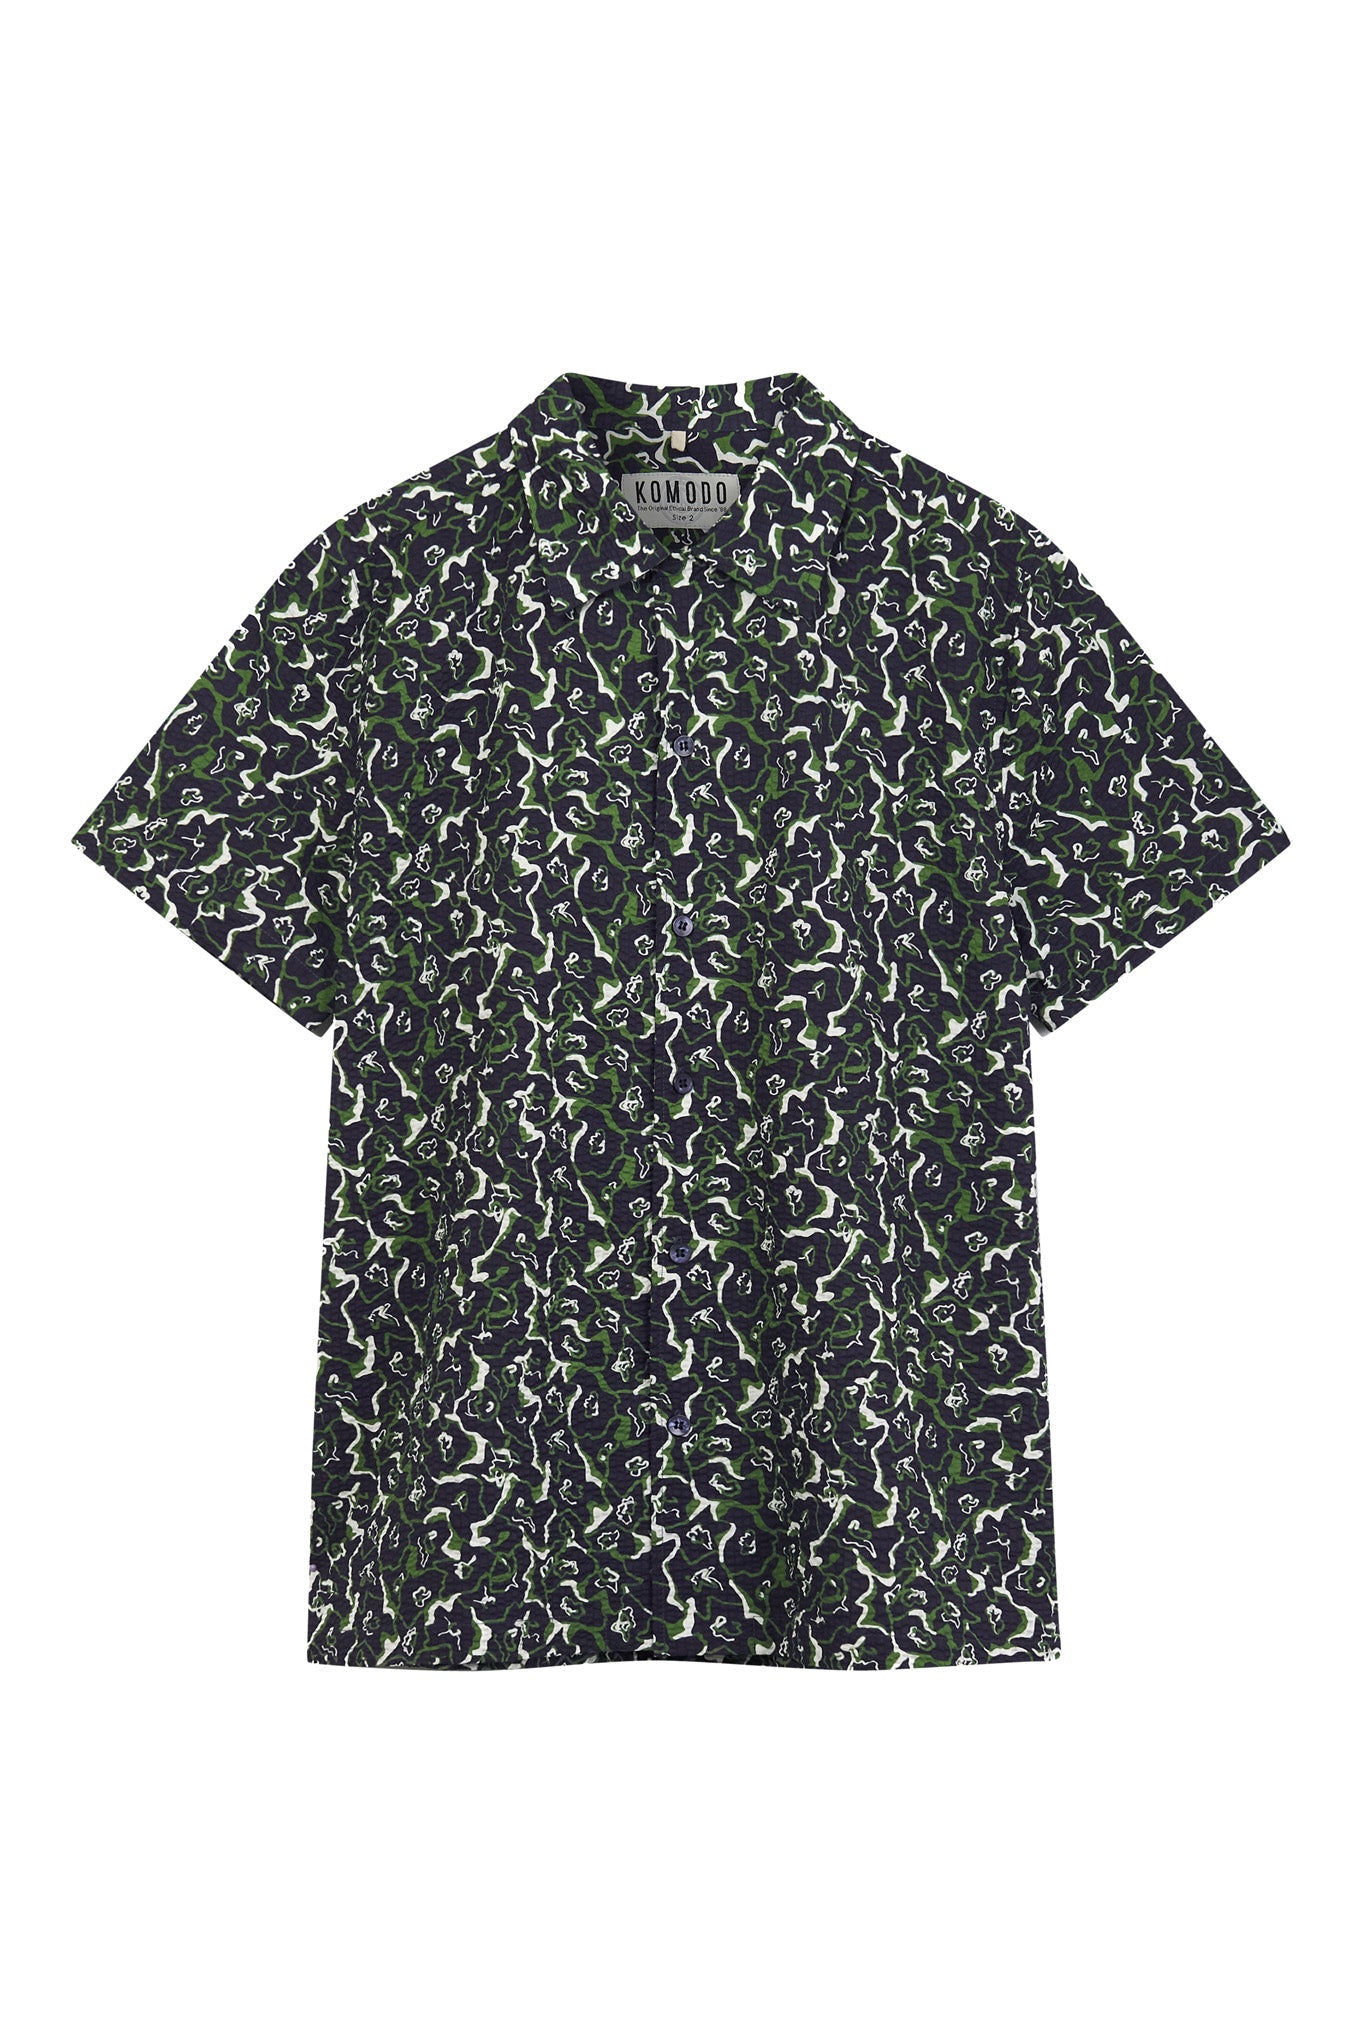 Navy blue SPINDRIFT organic cotton shirt from Komodo